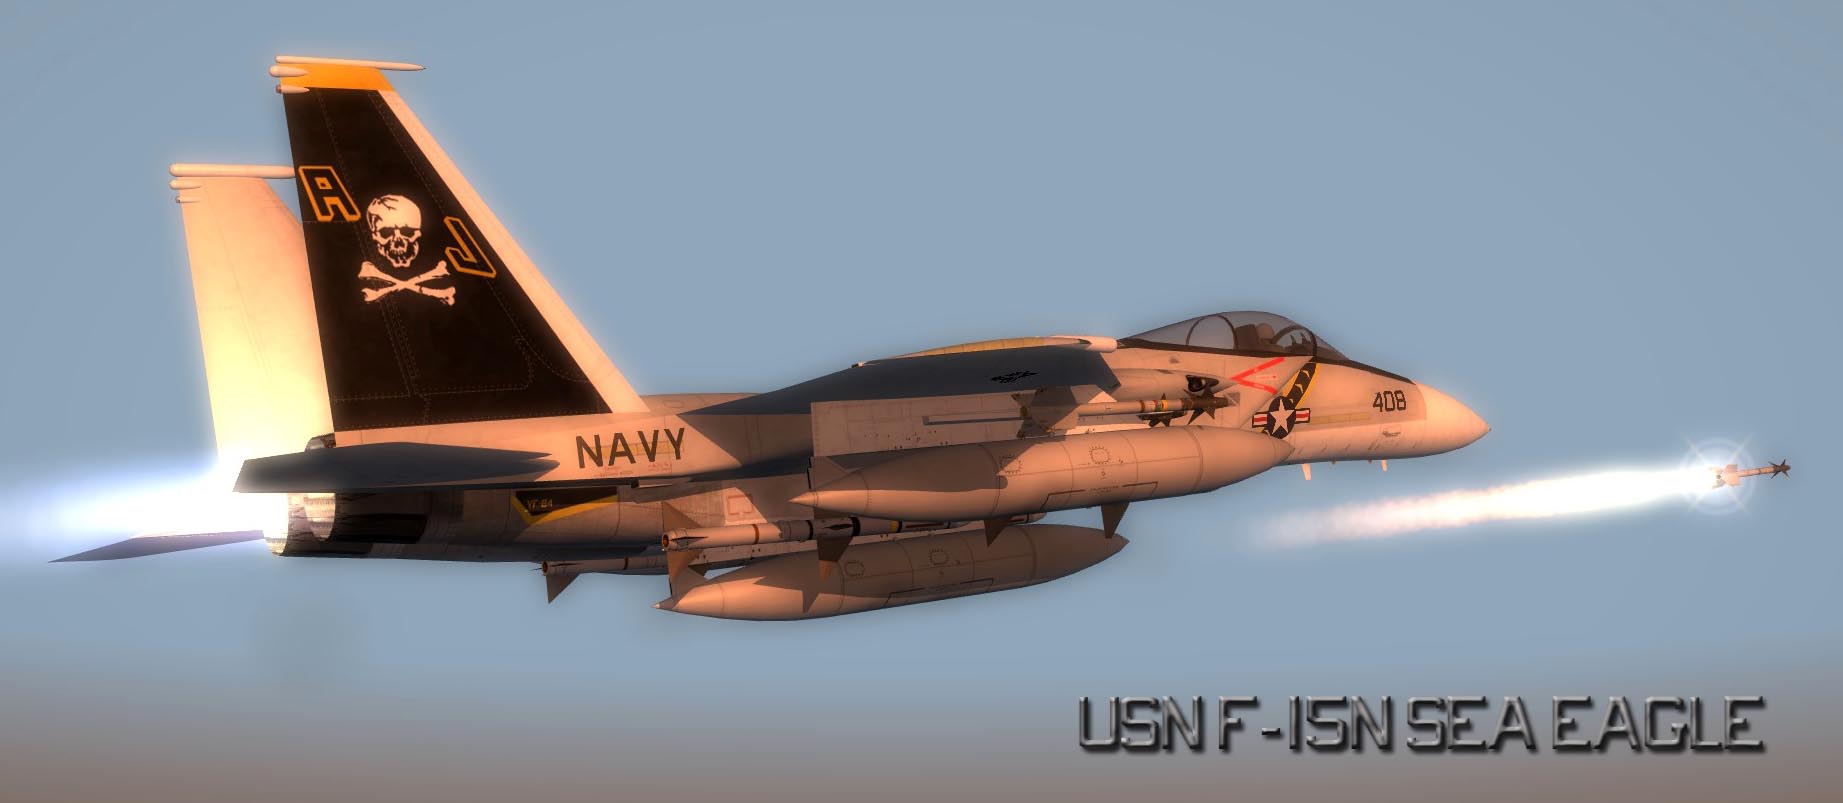 USN F-15N Sea Eagle 'What-If' Skin for TW F-15A